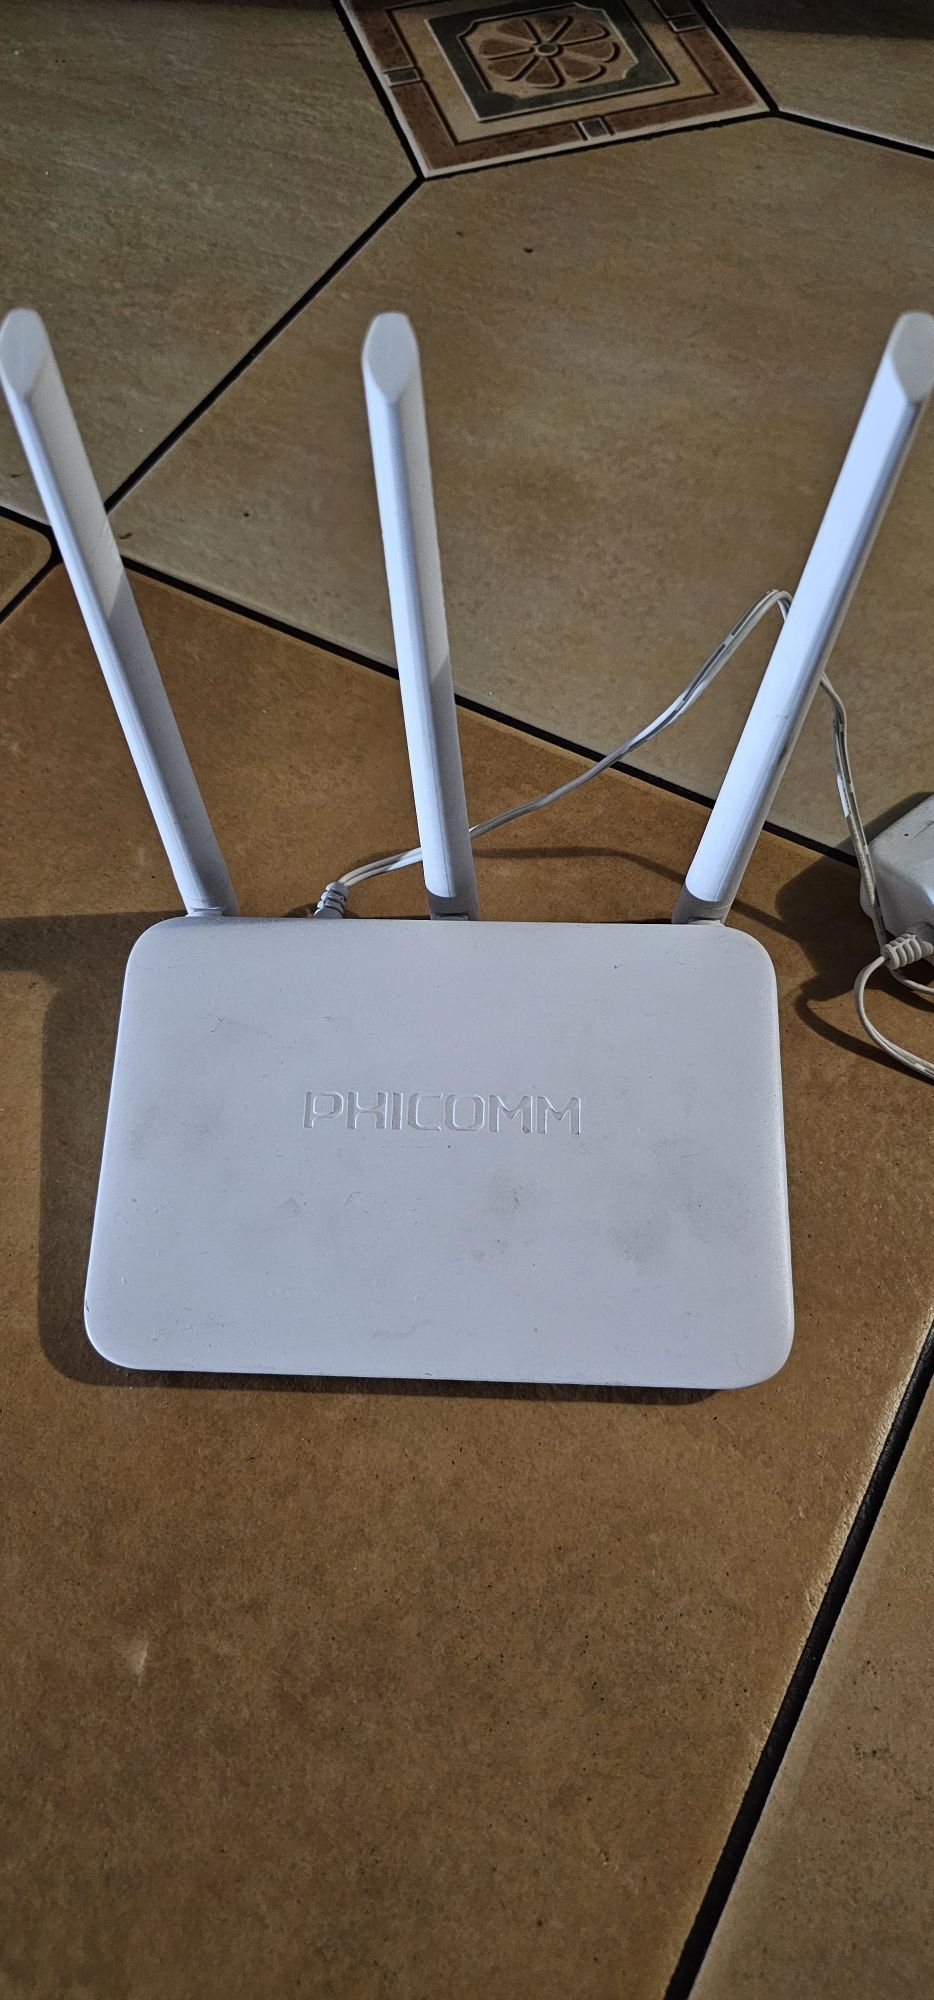 Router wifi phicomm